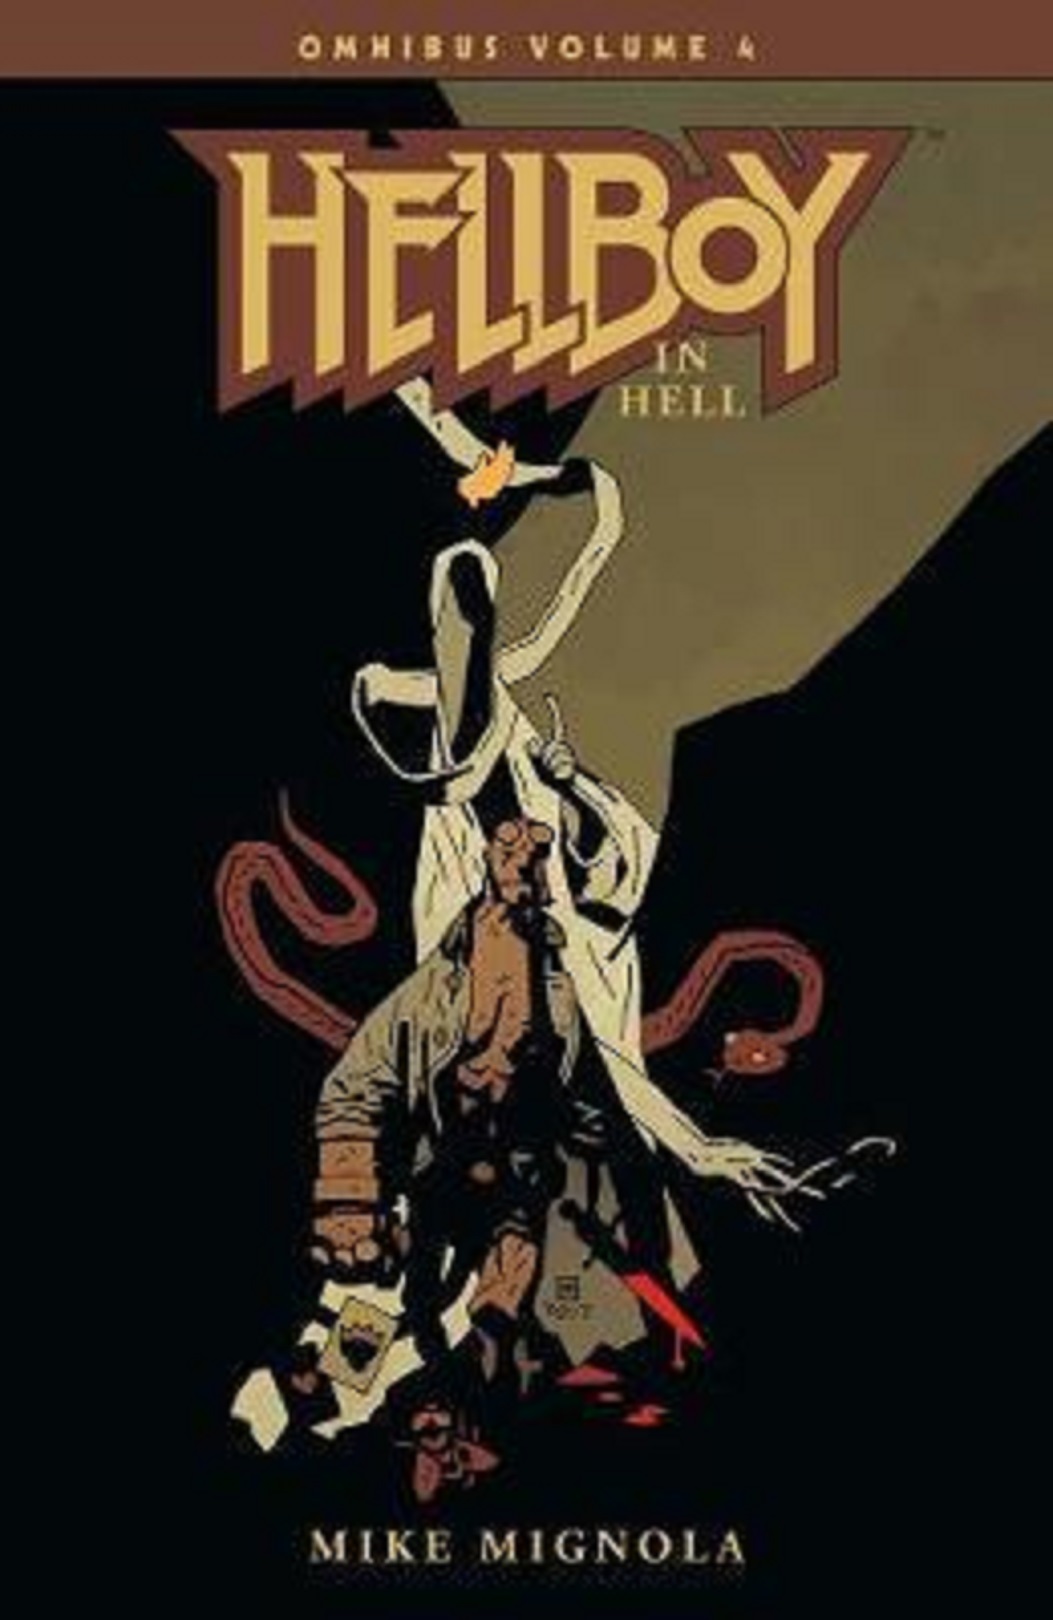 Hellboy Omnibus Volume 4: Hellboy in Hell | Mike Mignola image0